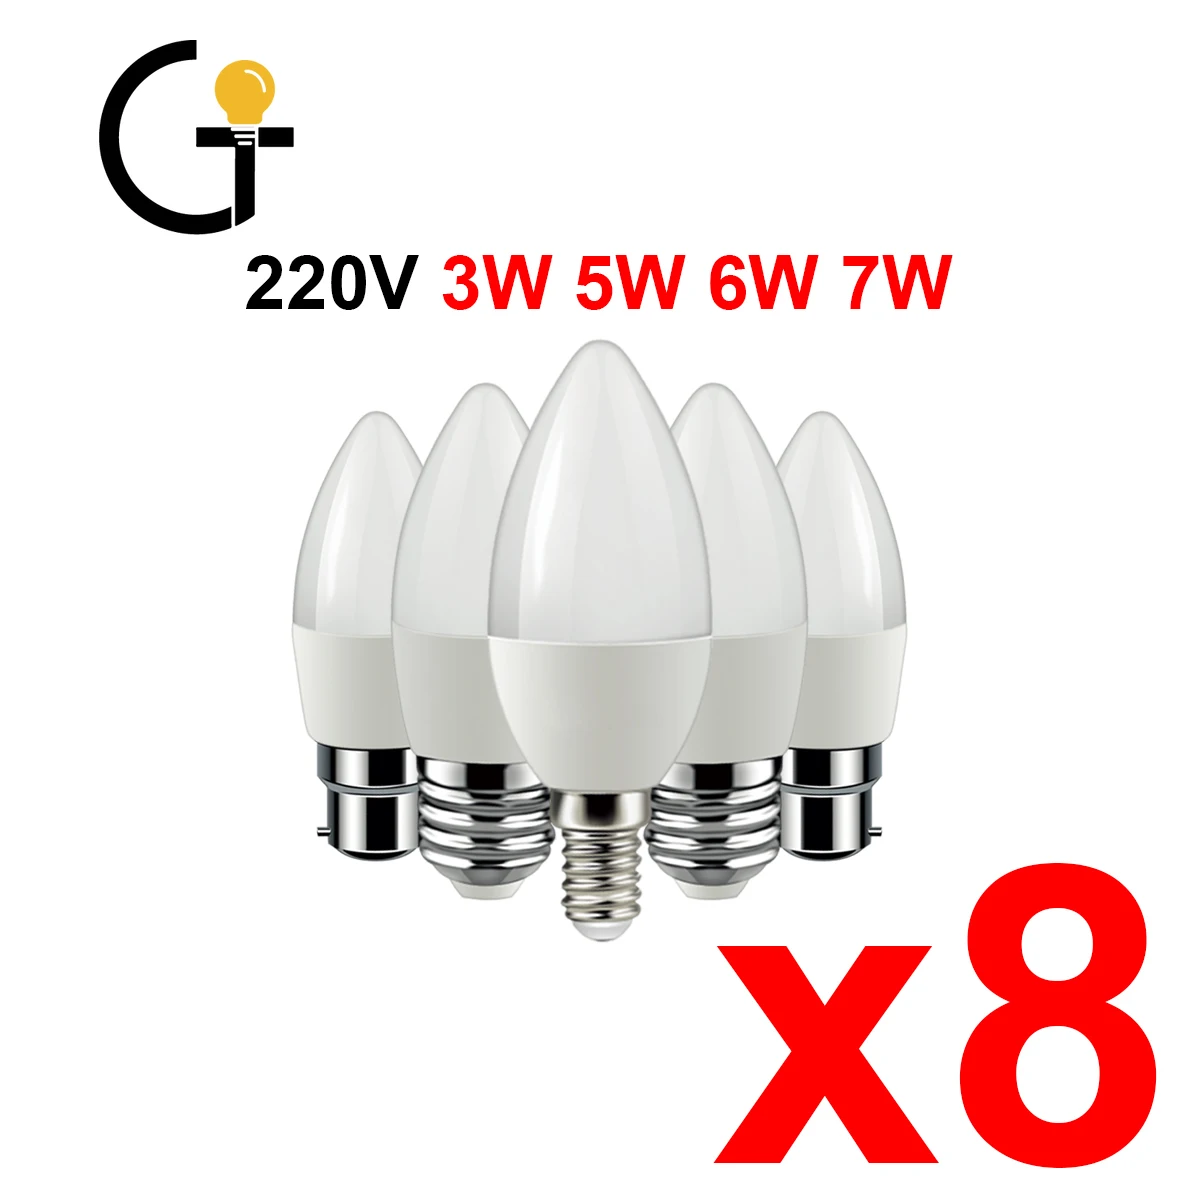 8pcs/lot Led Candle Bulb C37 3w 5w 6w 7w Warm White Cold White Day Light B22 E27 E14 AC220v-240v 6000k For Home Decoration Lamp